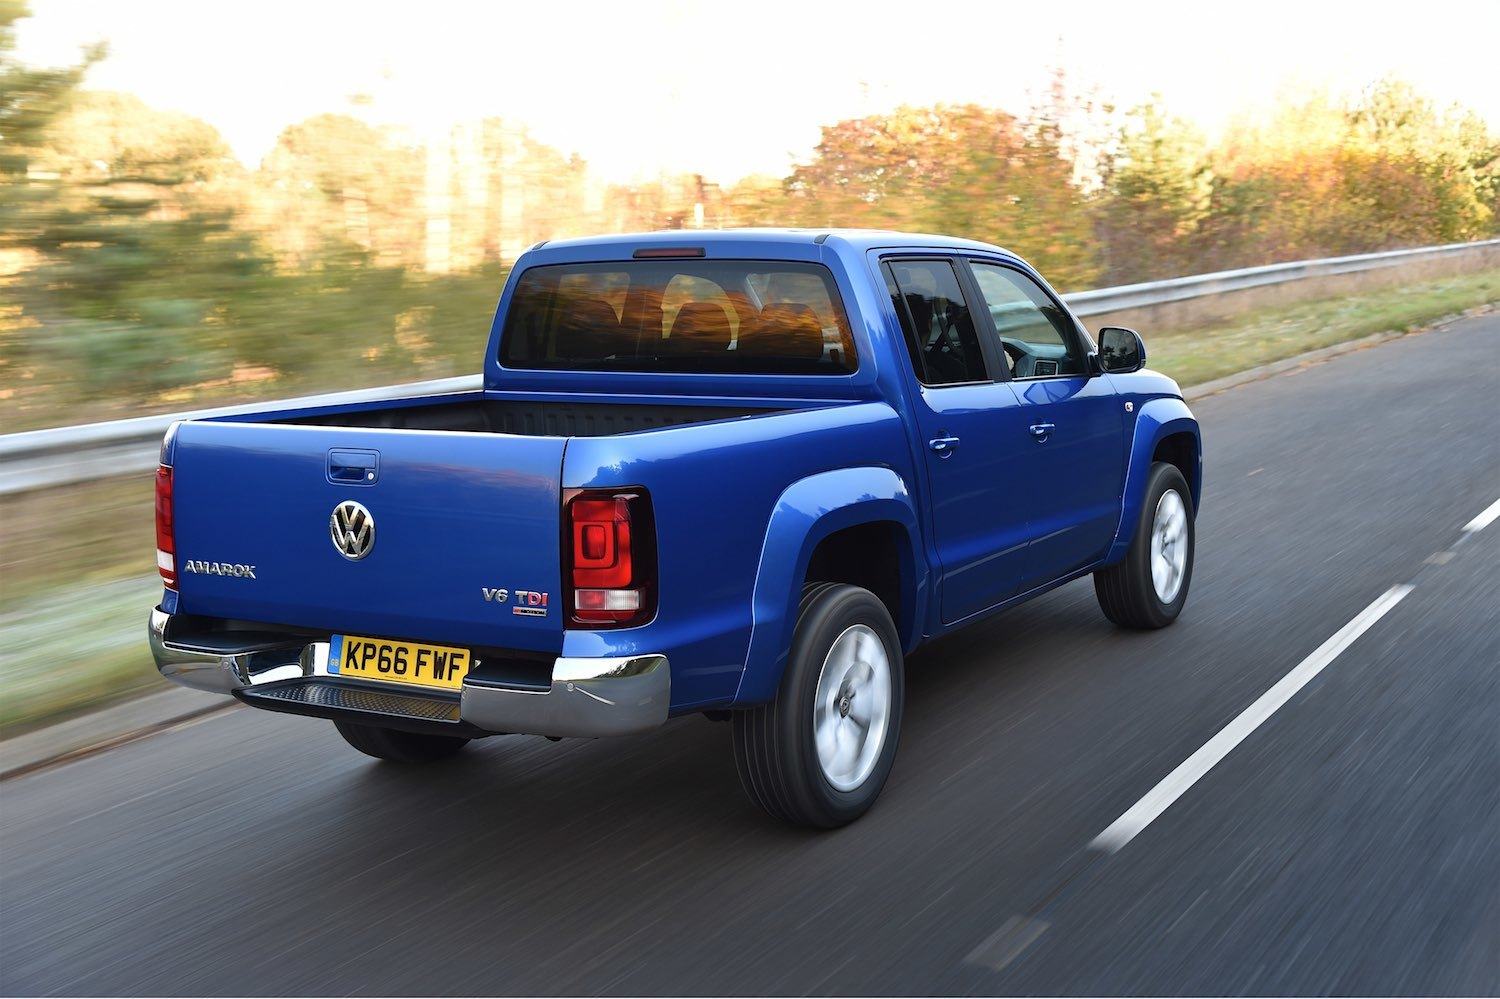 Neil Lyndon reviews the latest Volkswagen Amarok 24